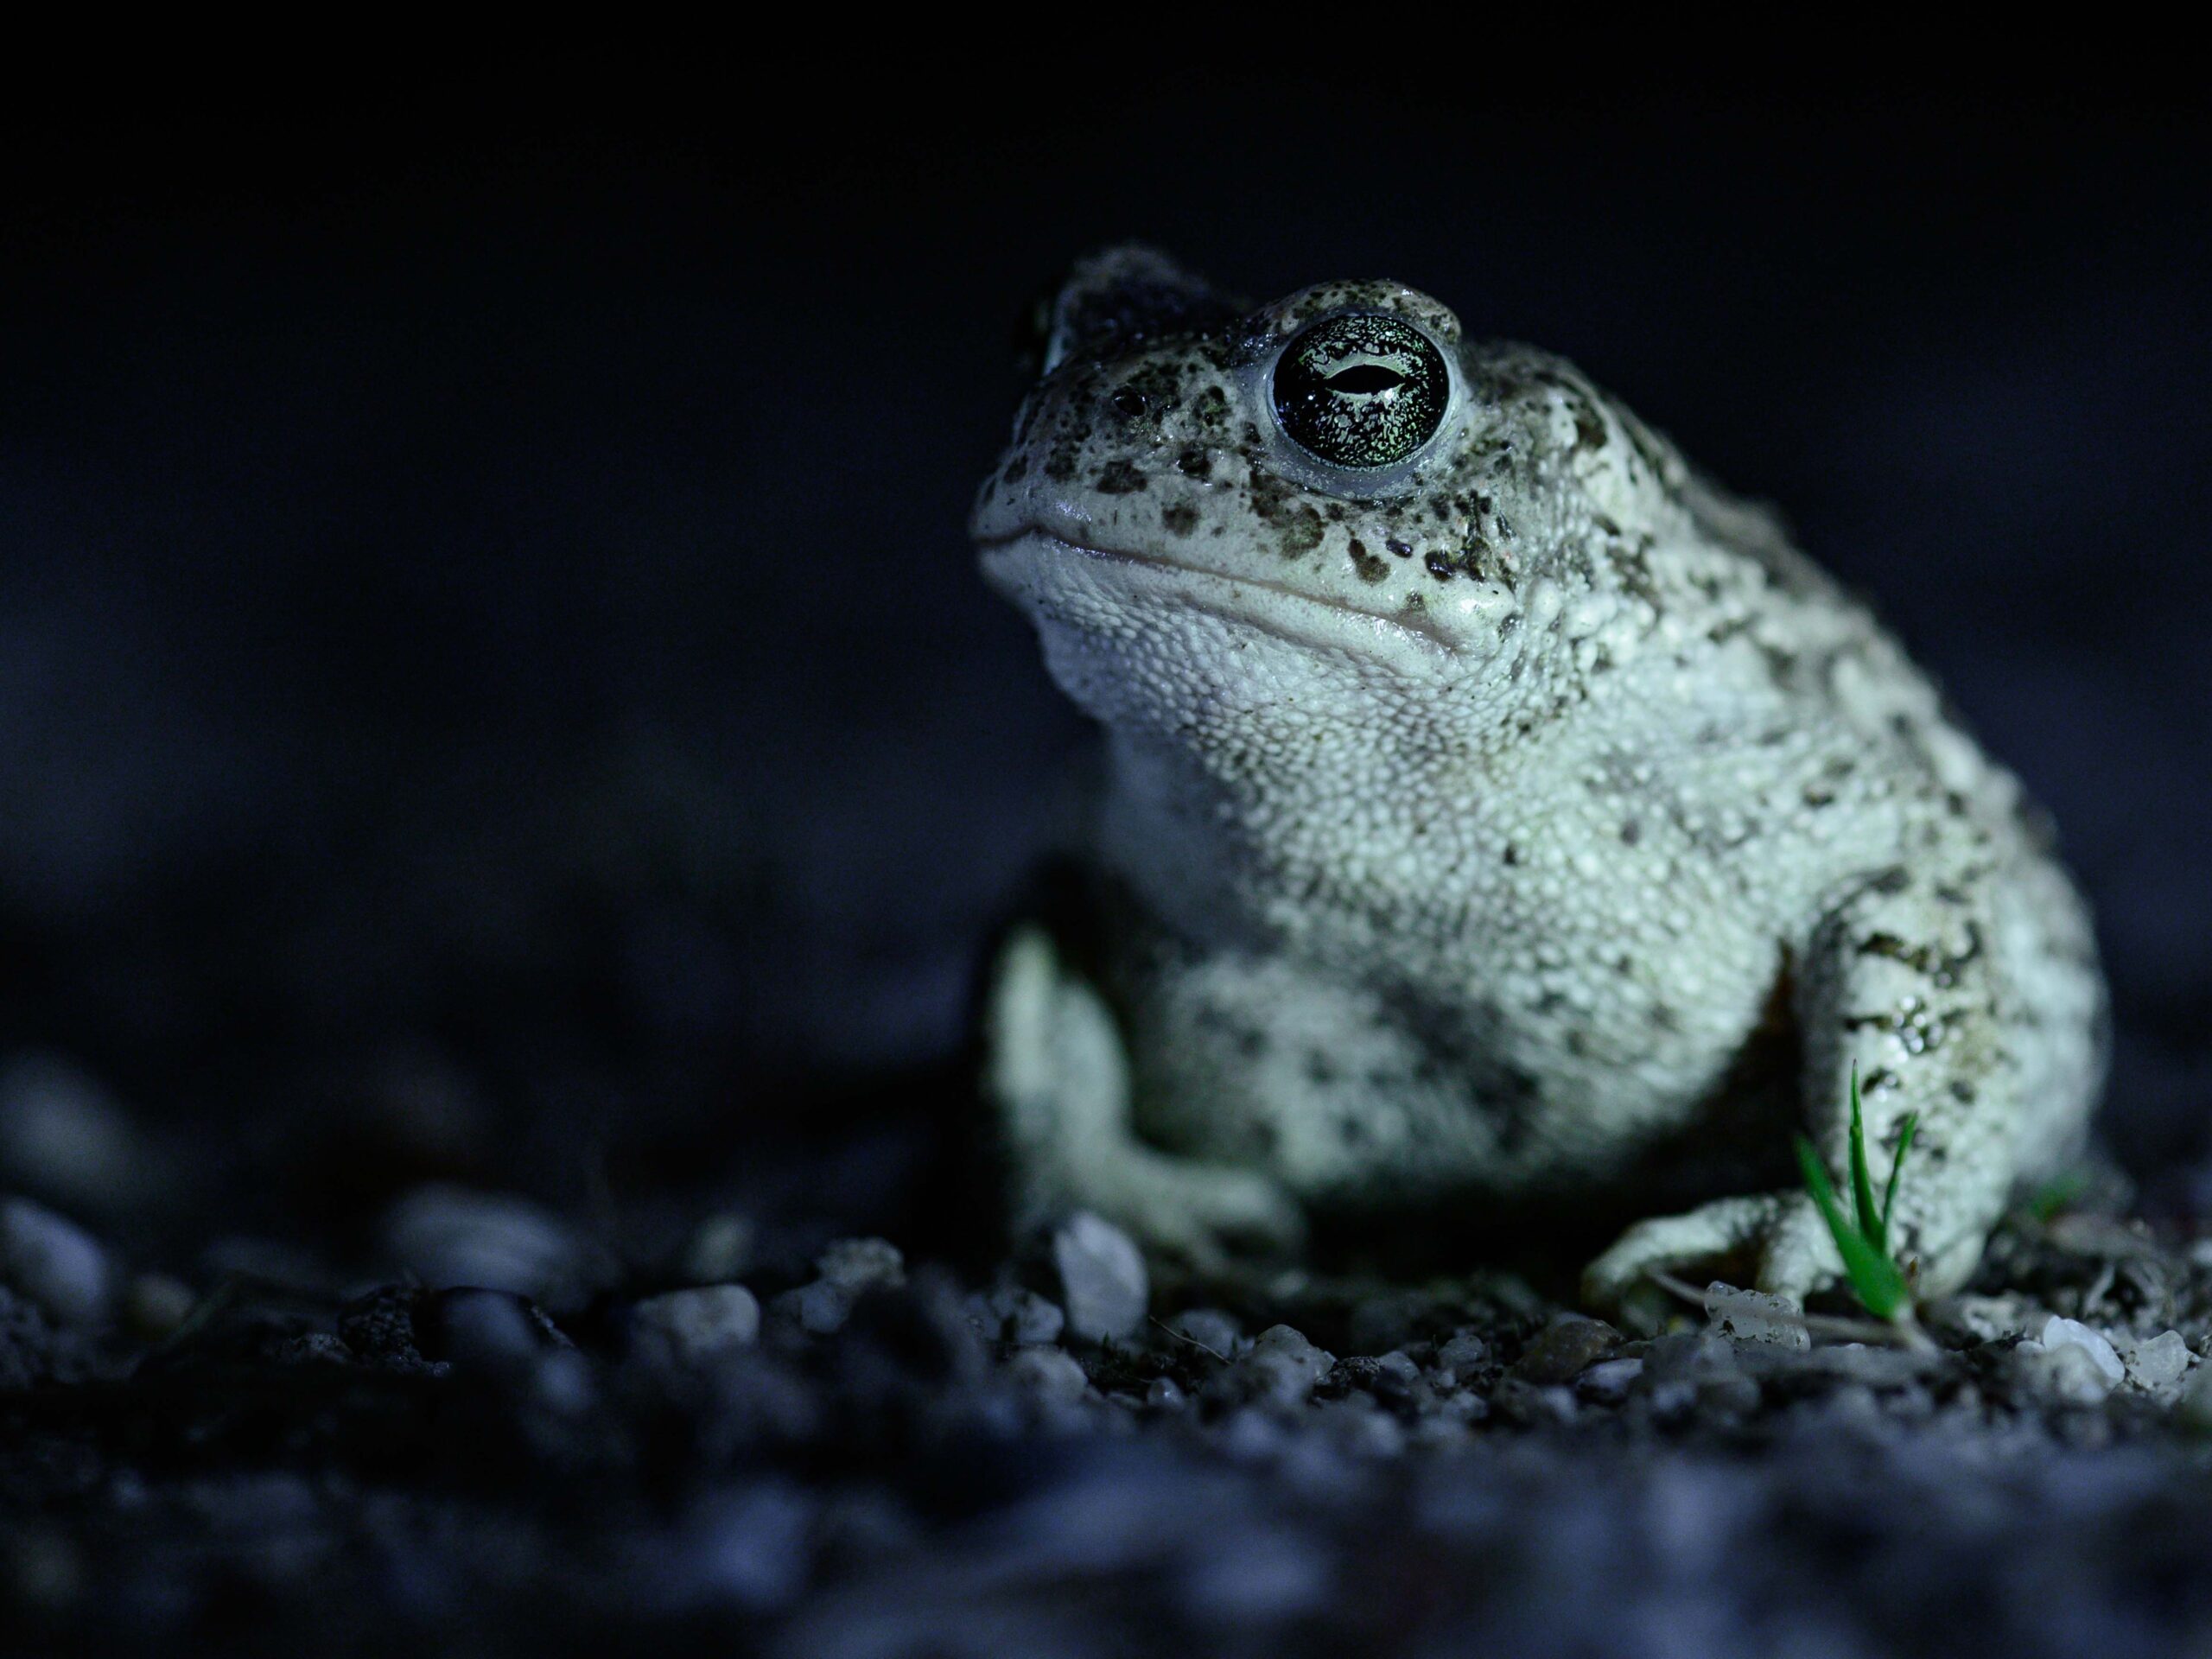 Natterjack toad in France